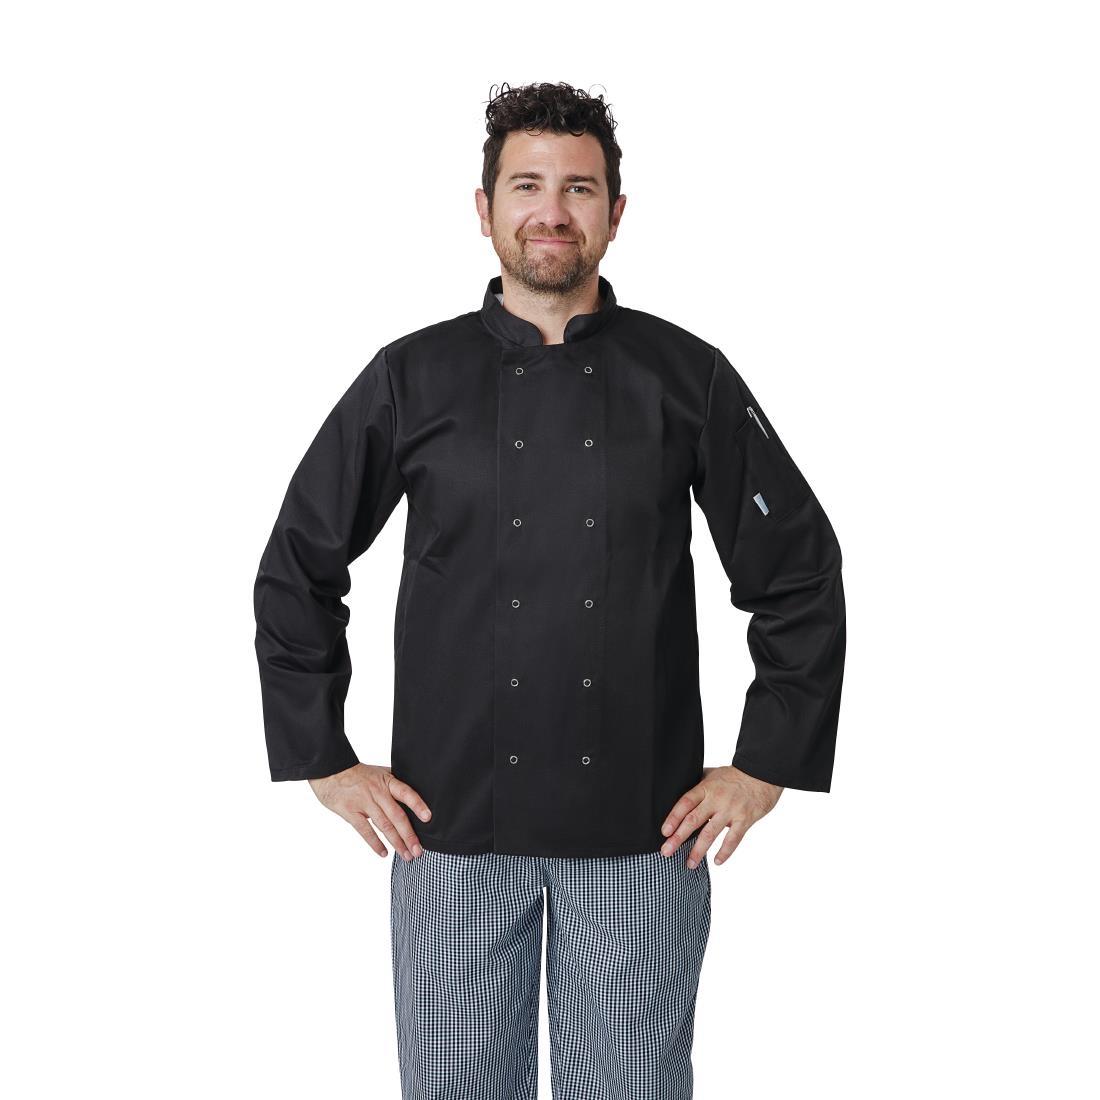 Whites Vegas Unisex Chefs Jacket Long Sleeve Black S - A438-S  - 5